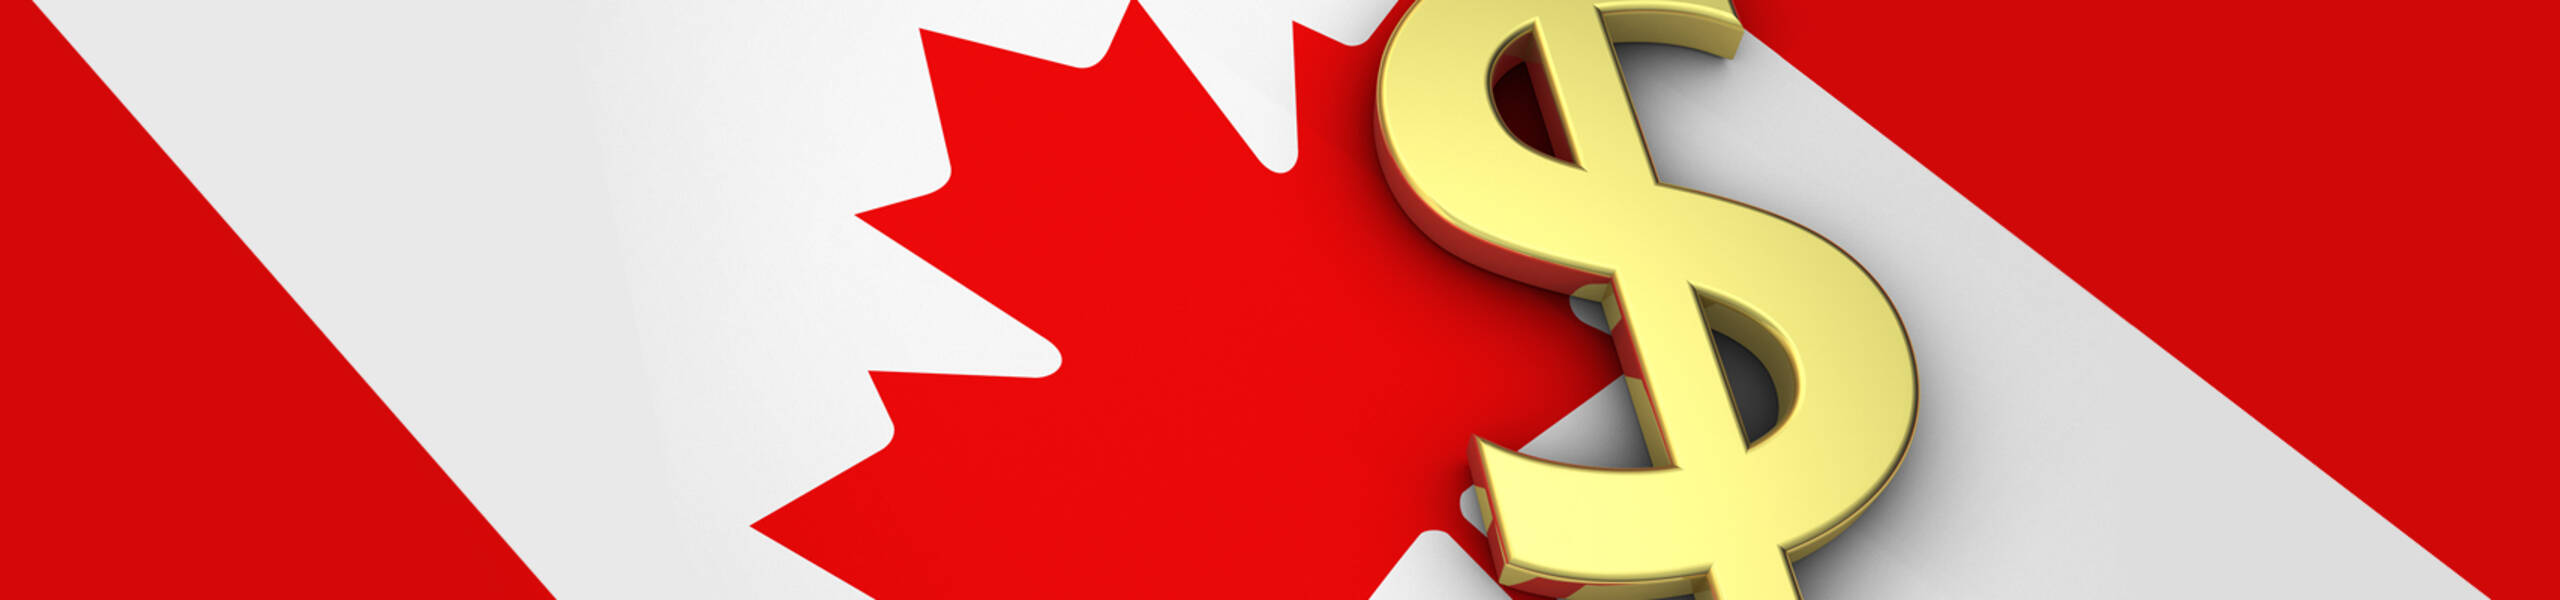 Déficit na balança comercial do Canadá surpreende analistas